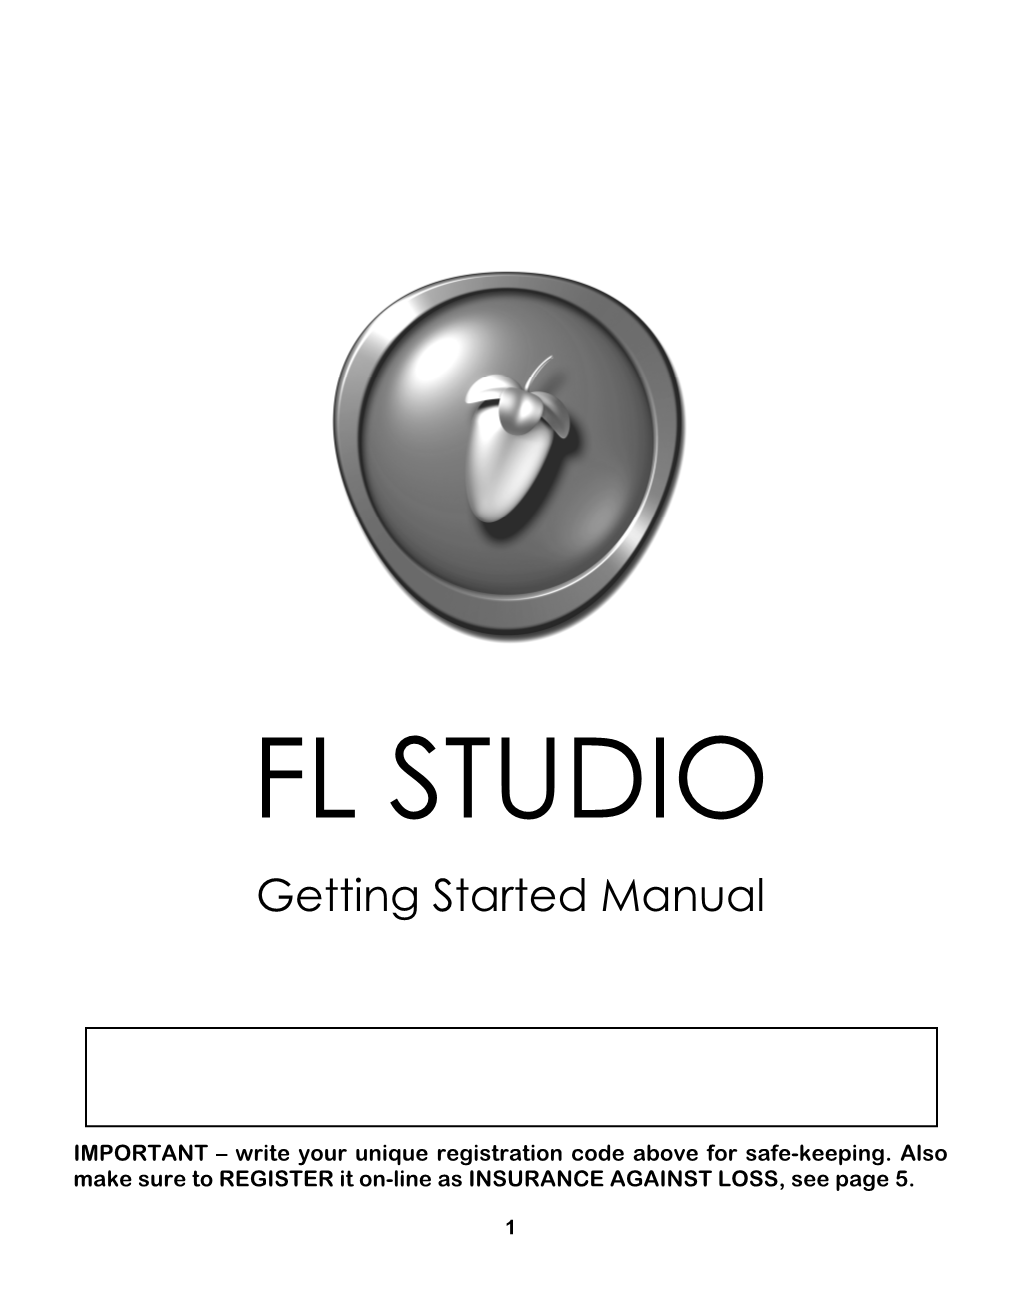 FL STUDIO Getting Started Manual